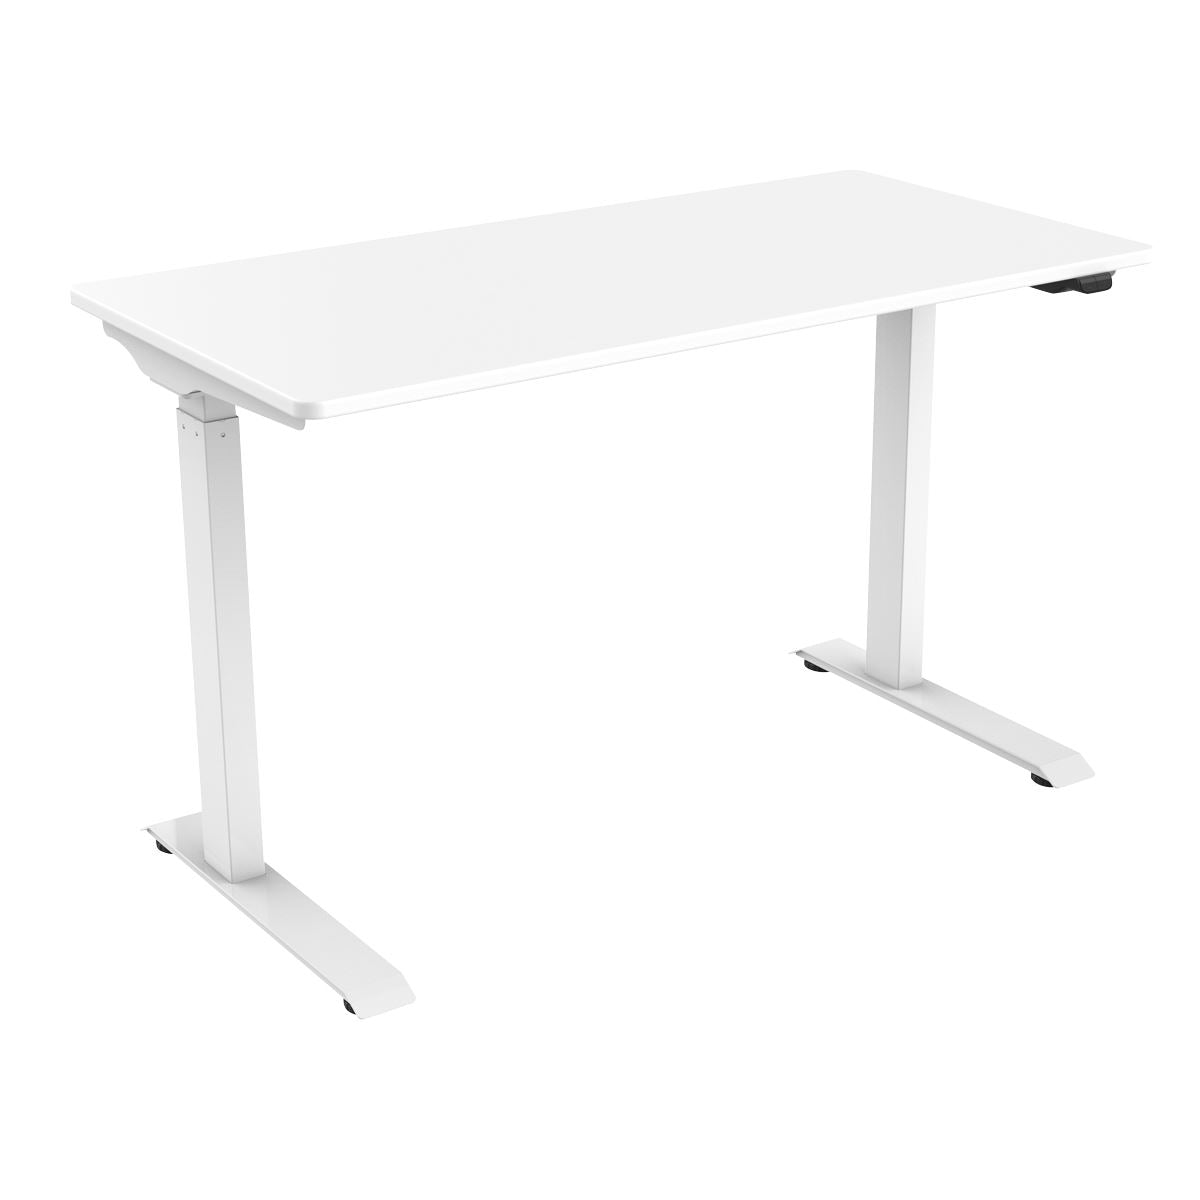 Dellonda White Electric Adjustable Office Standing Desk, Quiet & Fast 1200x600mm